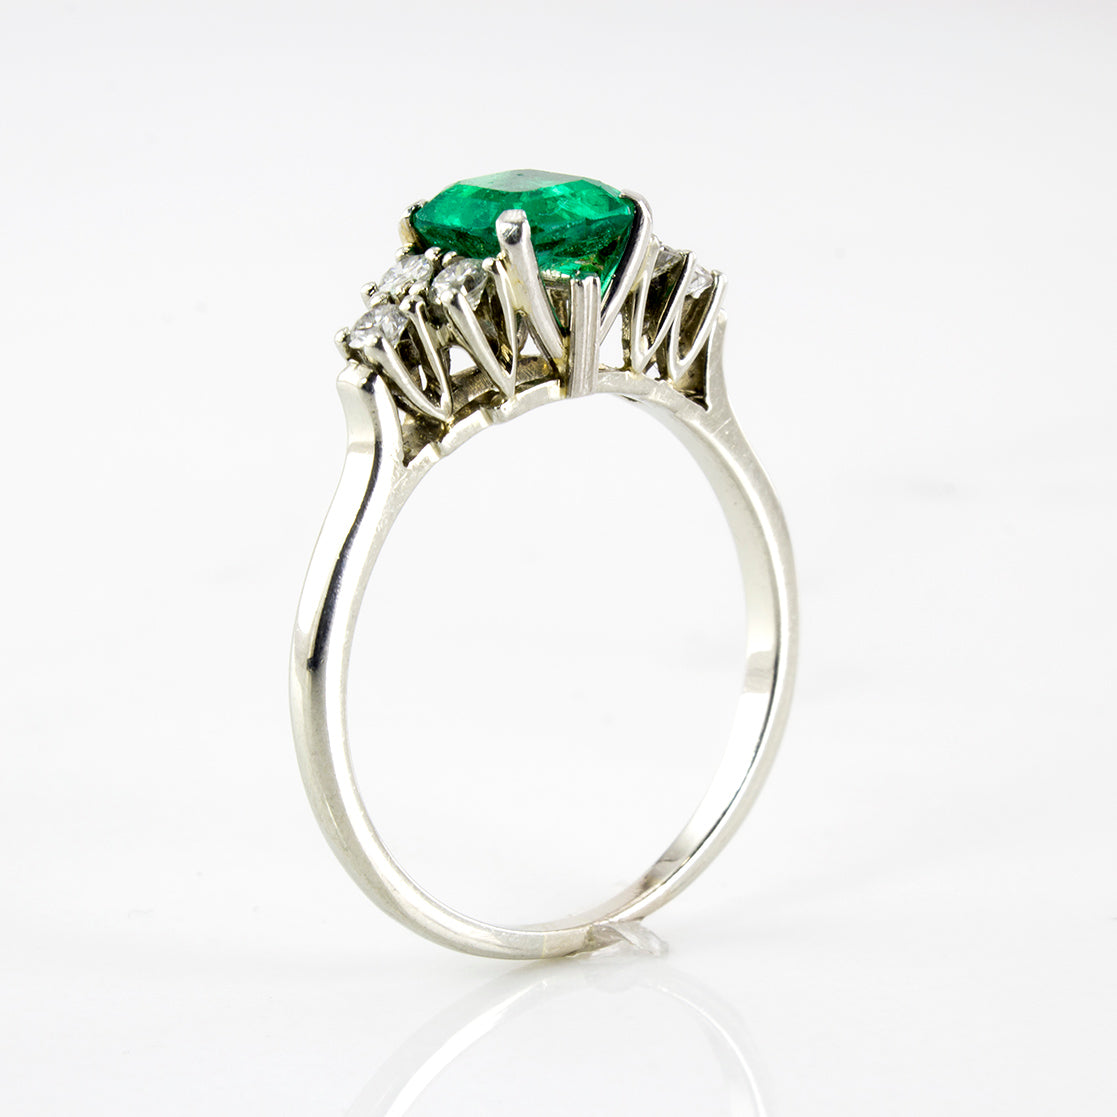 'Birks' Retro Modified Cushion Cut Emerald Ring | 0.43ct Emerald, 0.24ctw Diamonds | SZ 7.25